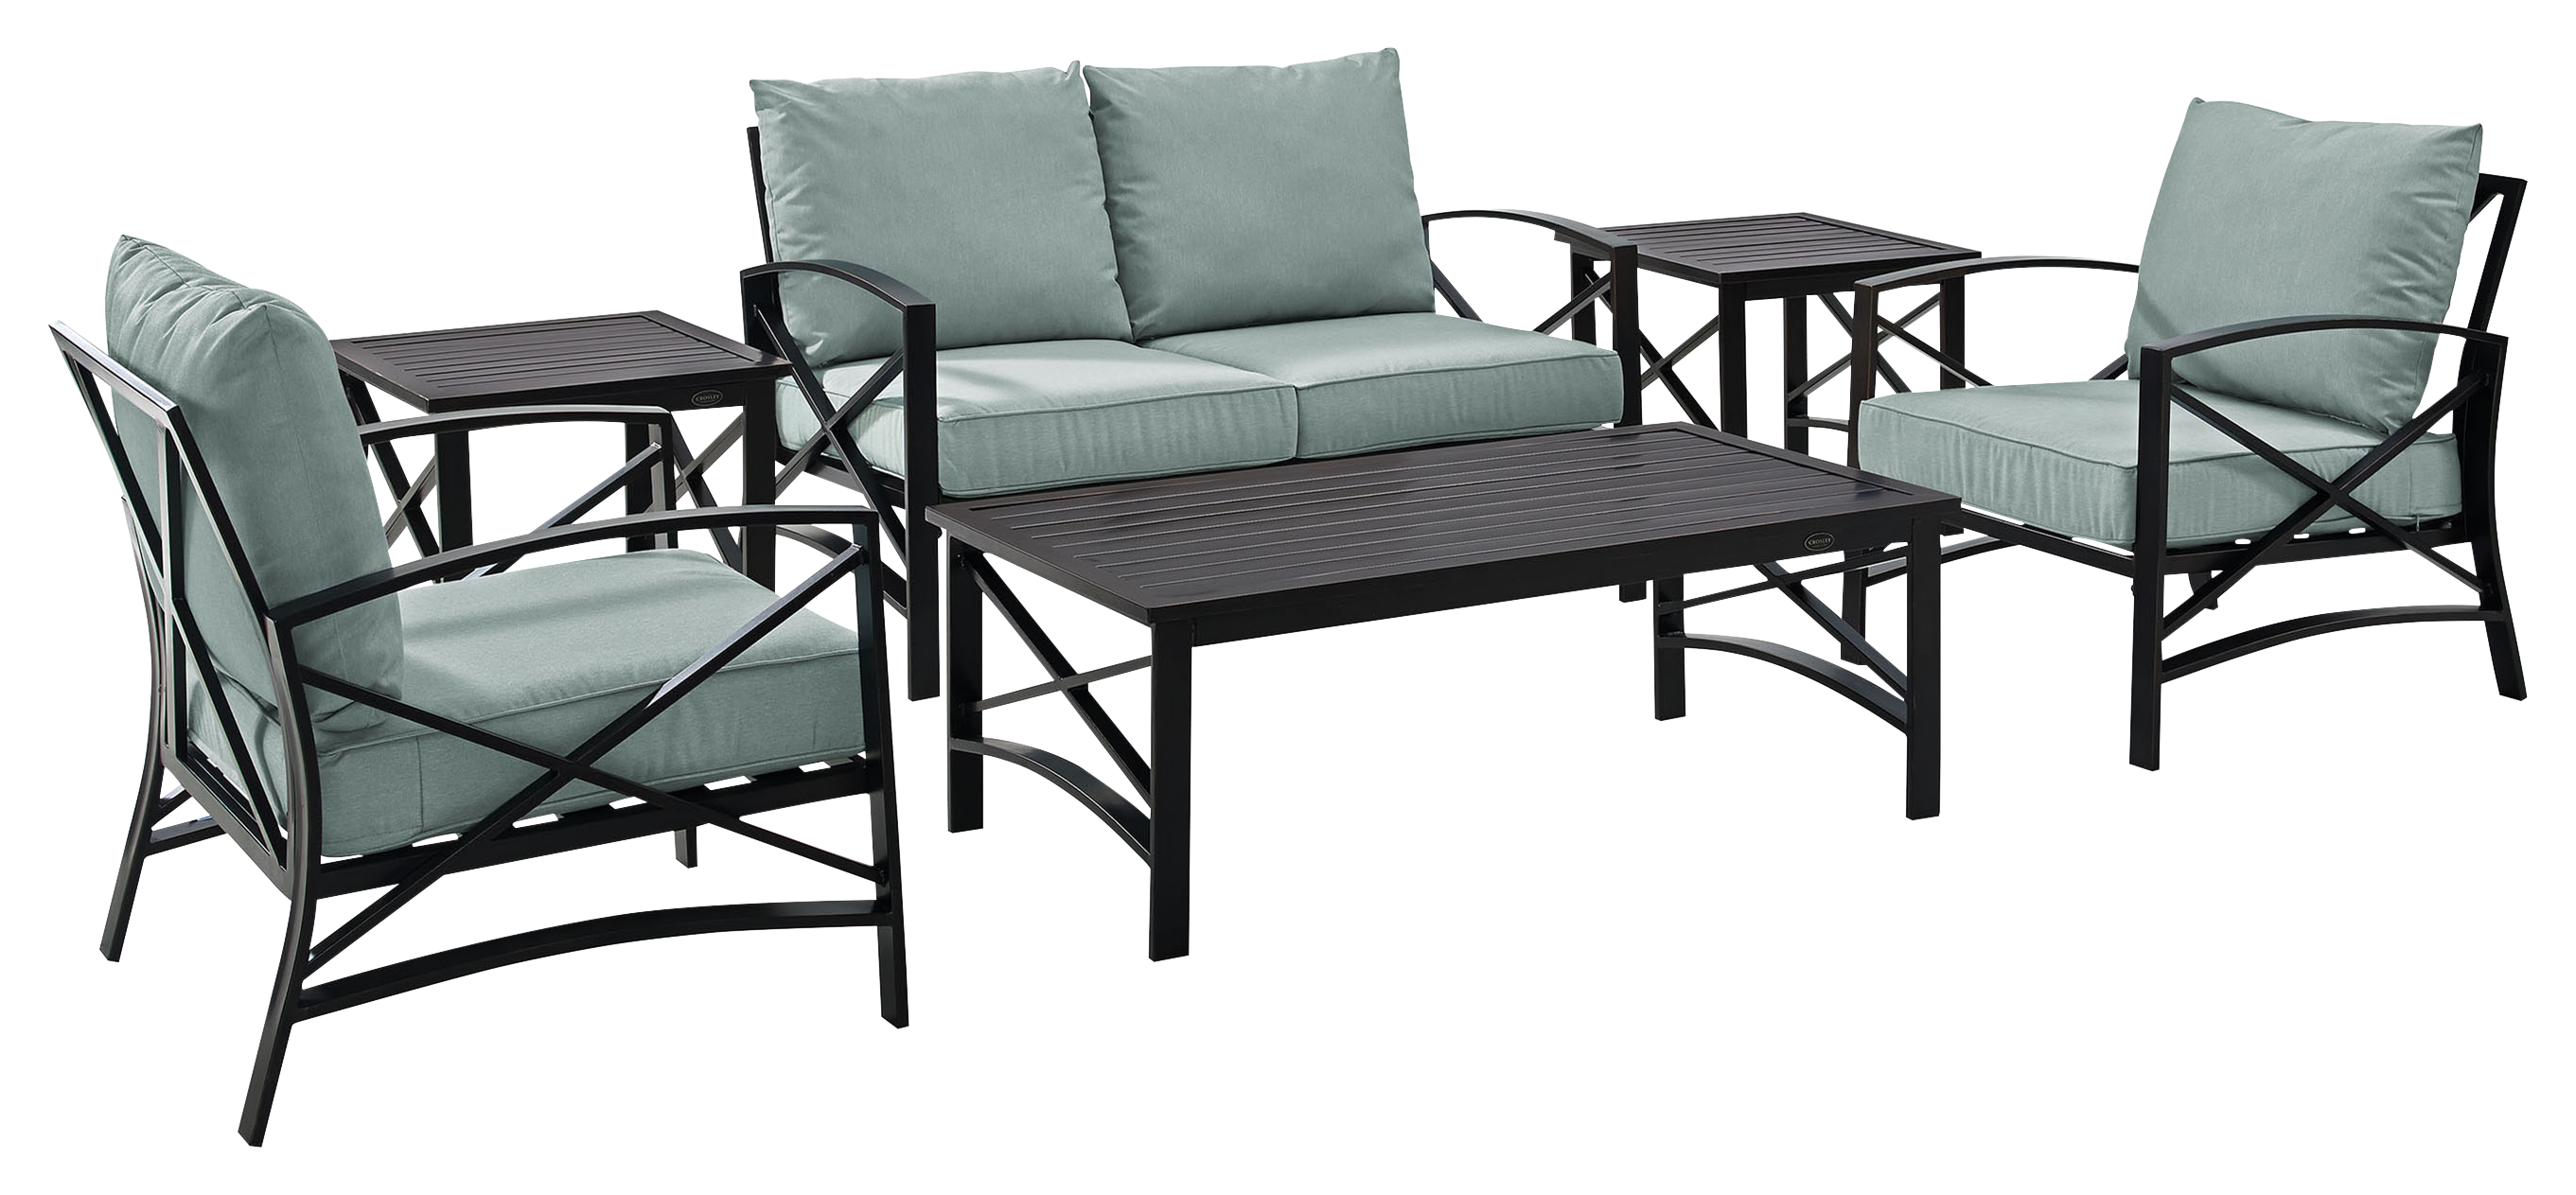 Crosley Kaplan Loveseat, Armchairs, And Tables 6 Piece Outdoor Metal Patio Furniture Set Mist/black